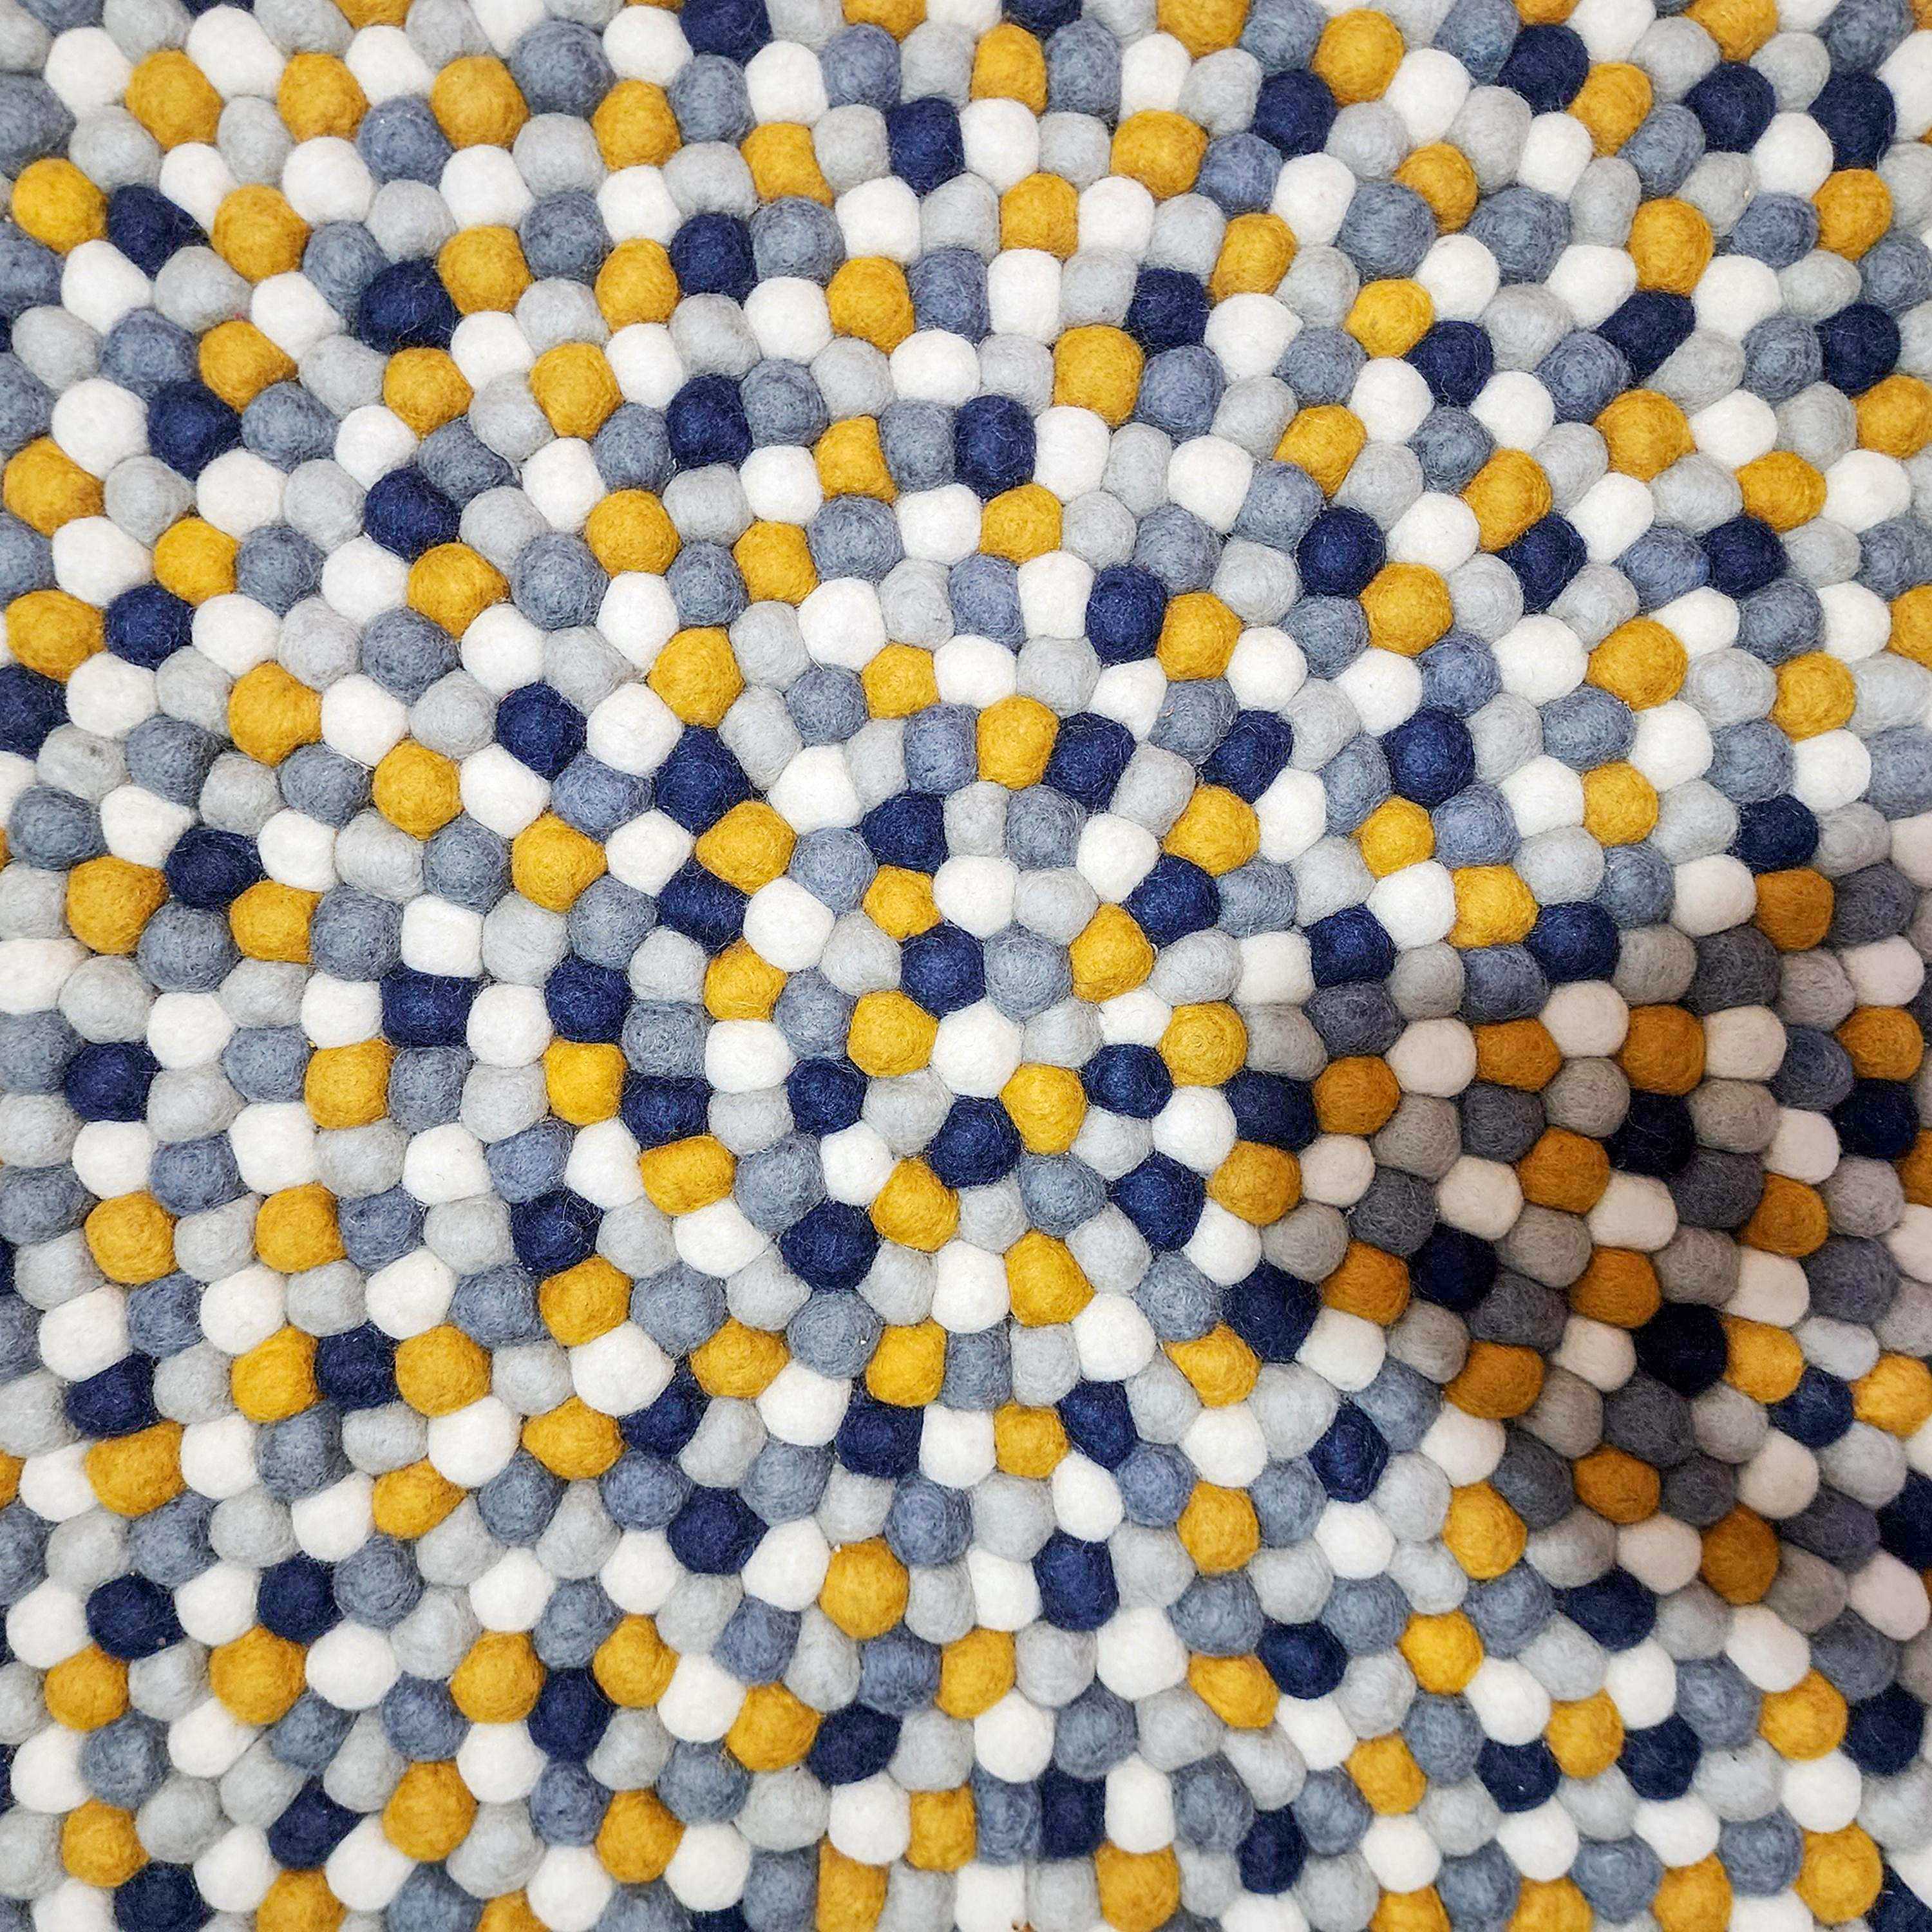 felt Beads Matt, Handwoven In Nepal, Blue, Yellow And White Color, Large Size, Felt Carpet